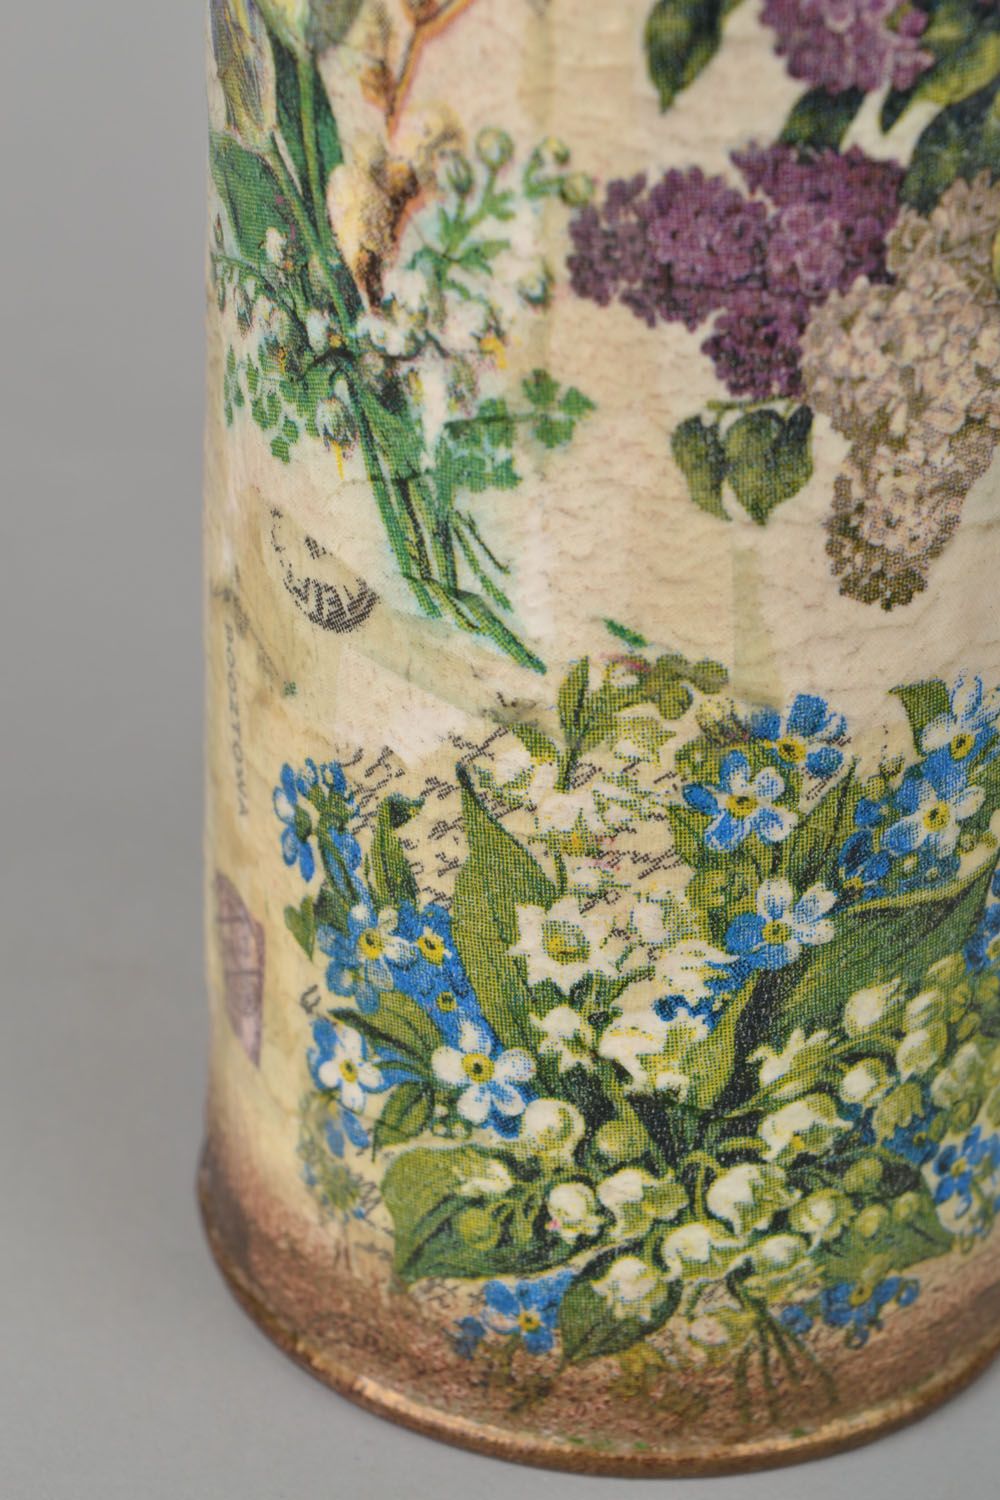 15 oz decorative handmade jar in floral design with lid 0,15 lb photo 2